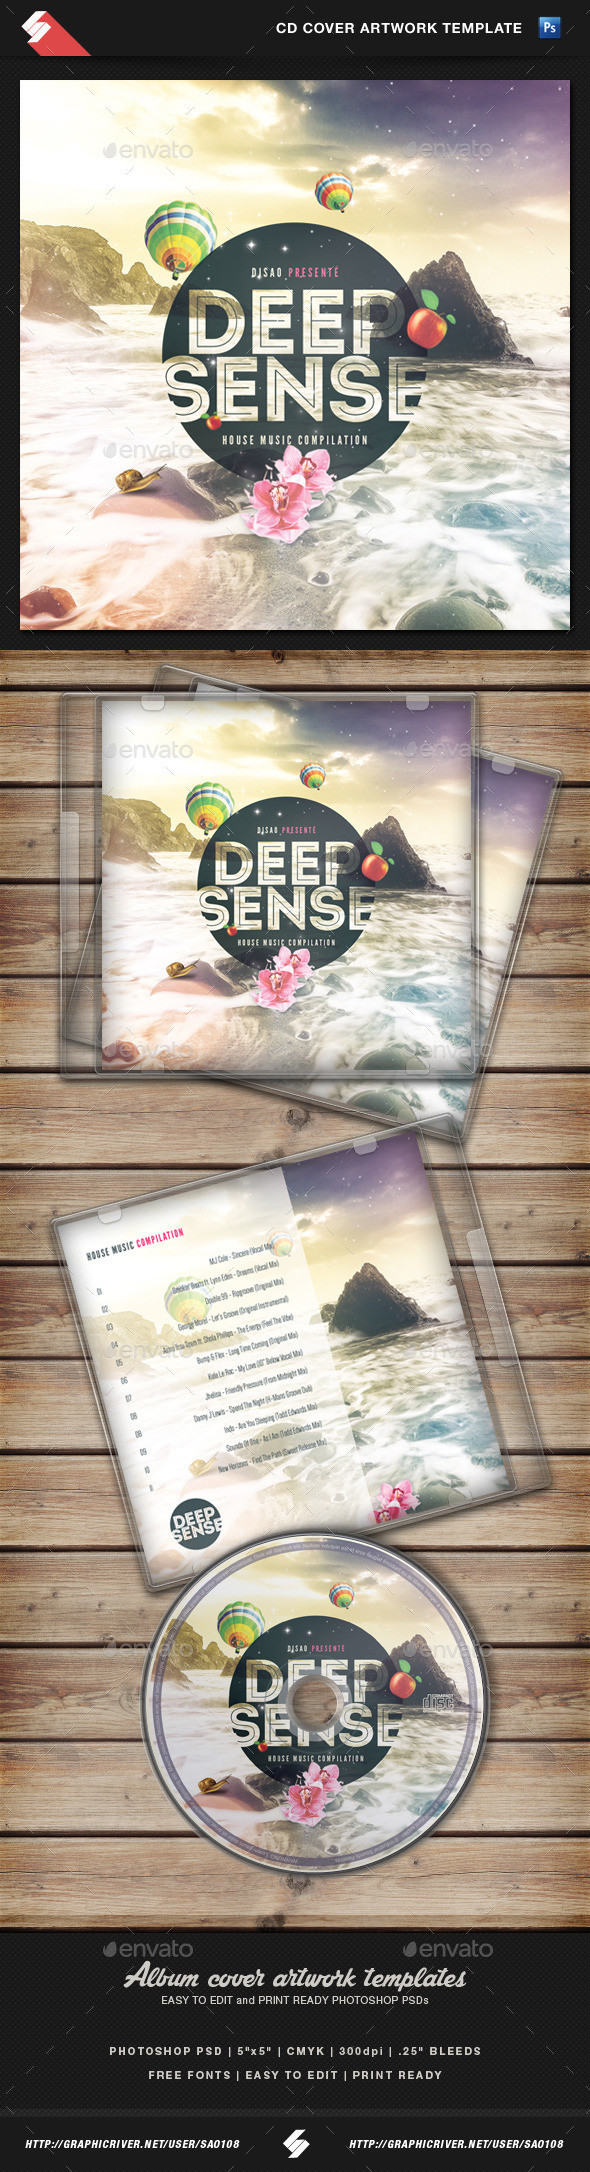 Deepsense cd cover template preview